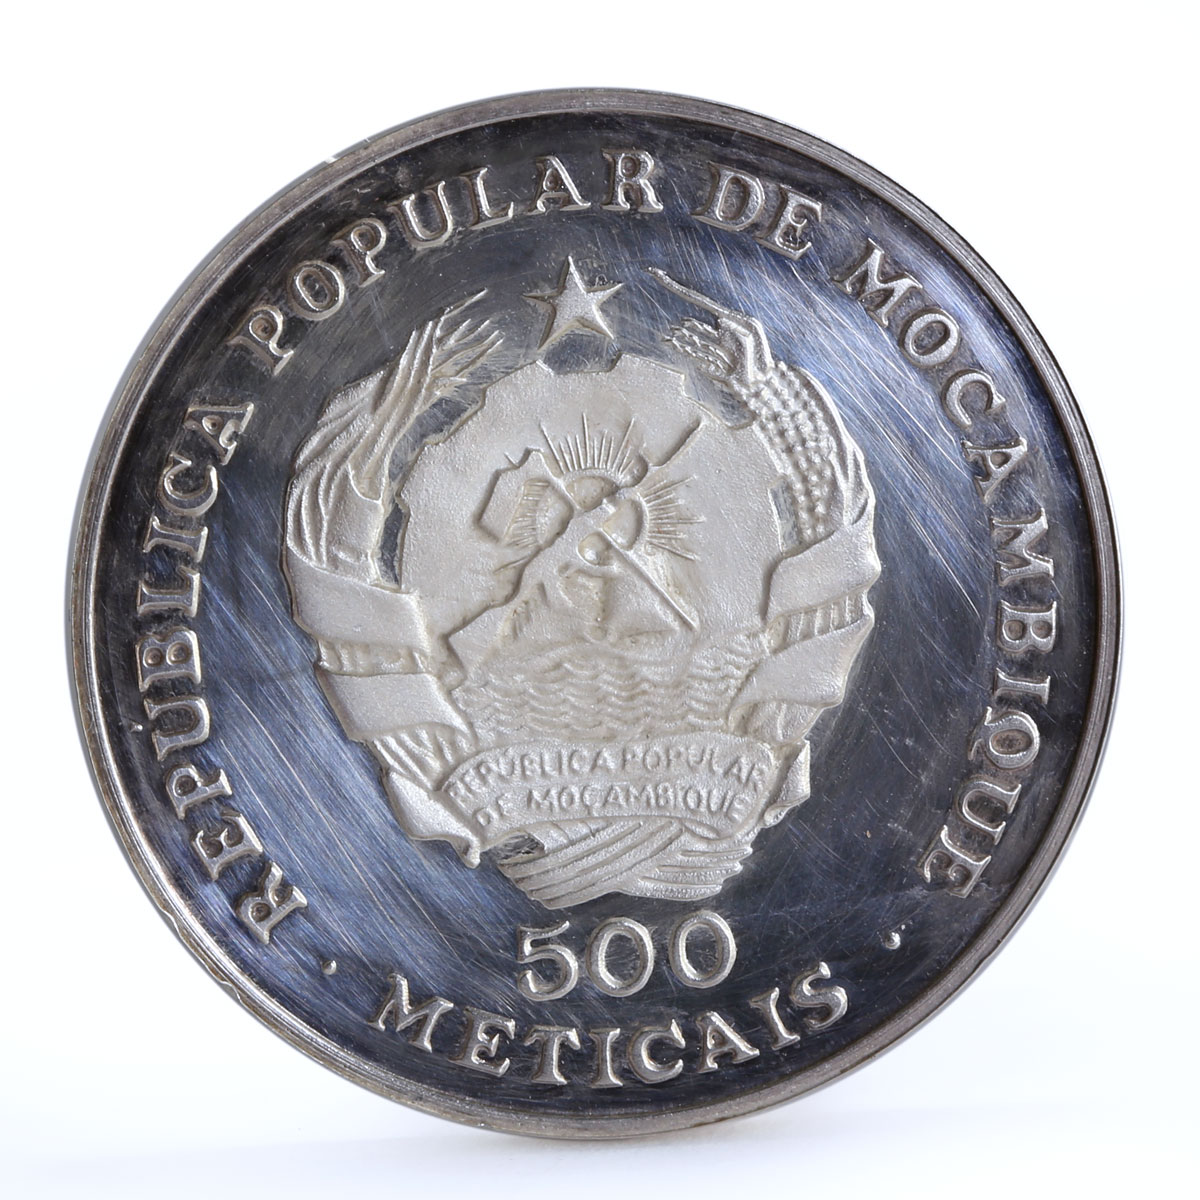 Mozambique 500 meticais Defence of Nature Lion Pride Fauna silver coin 1989